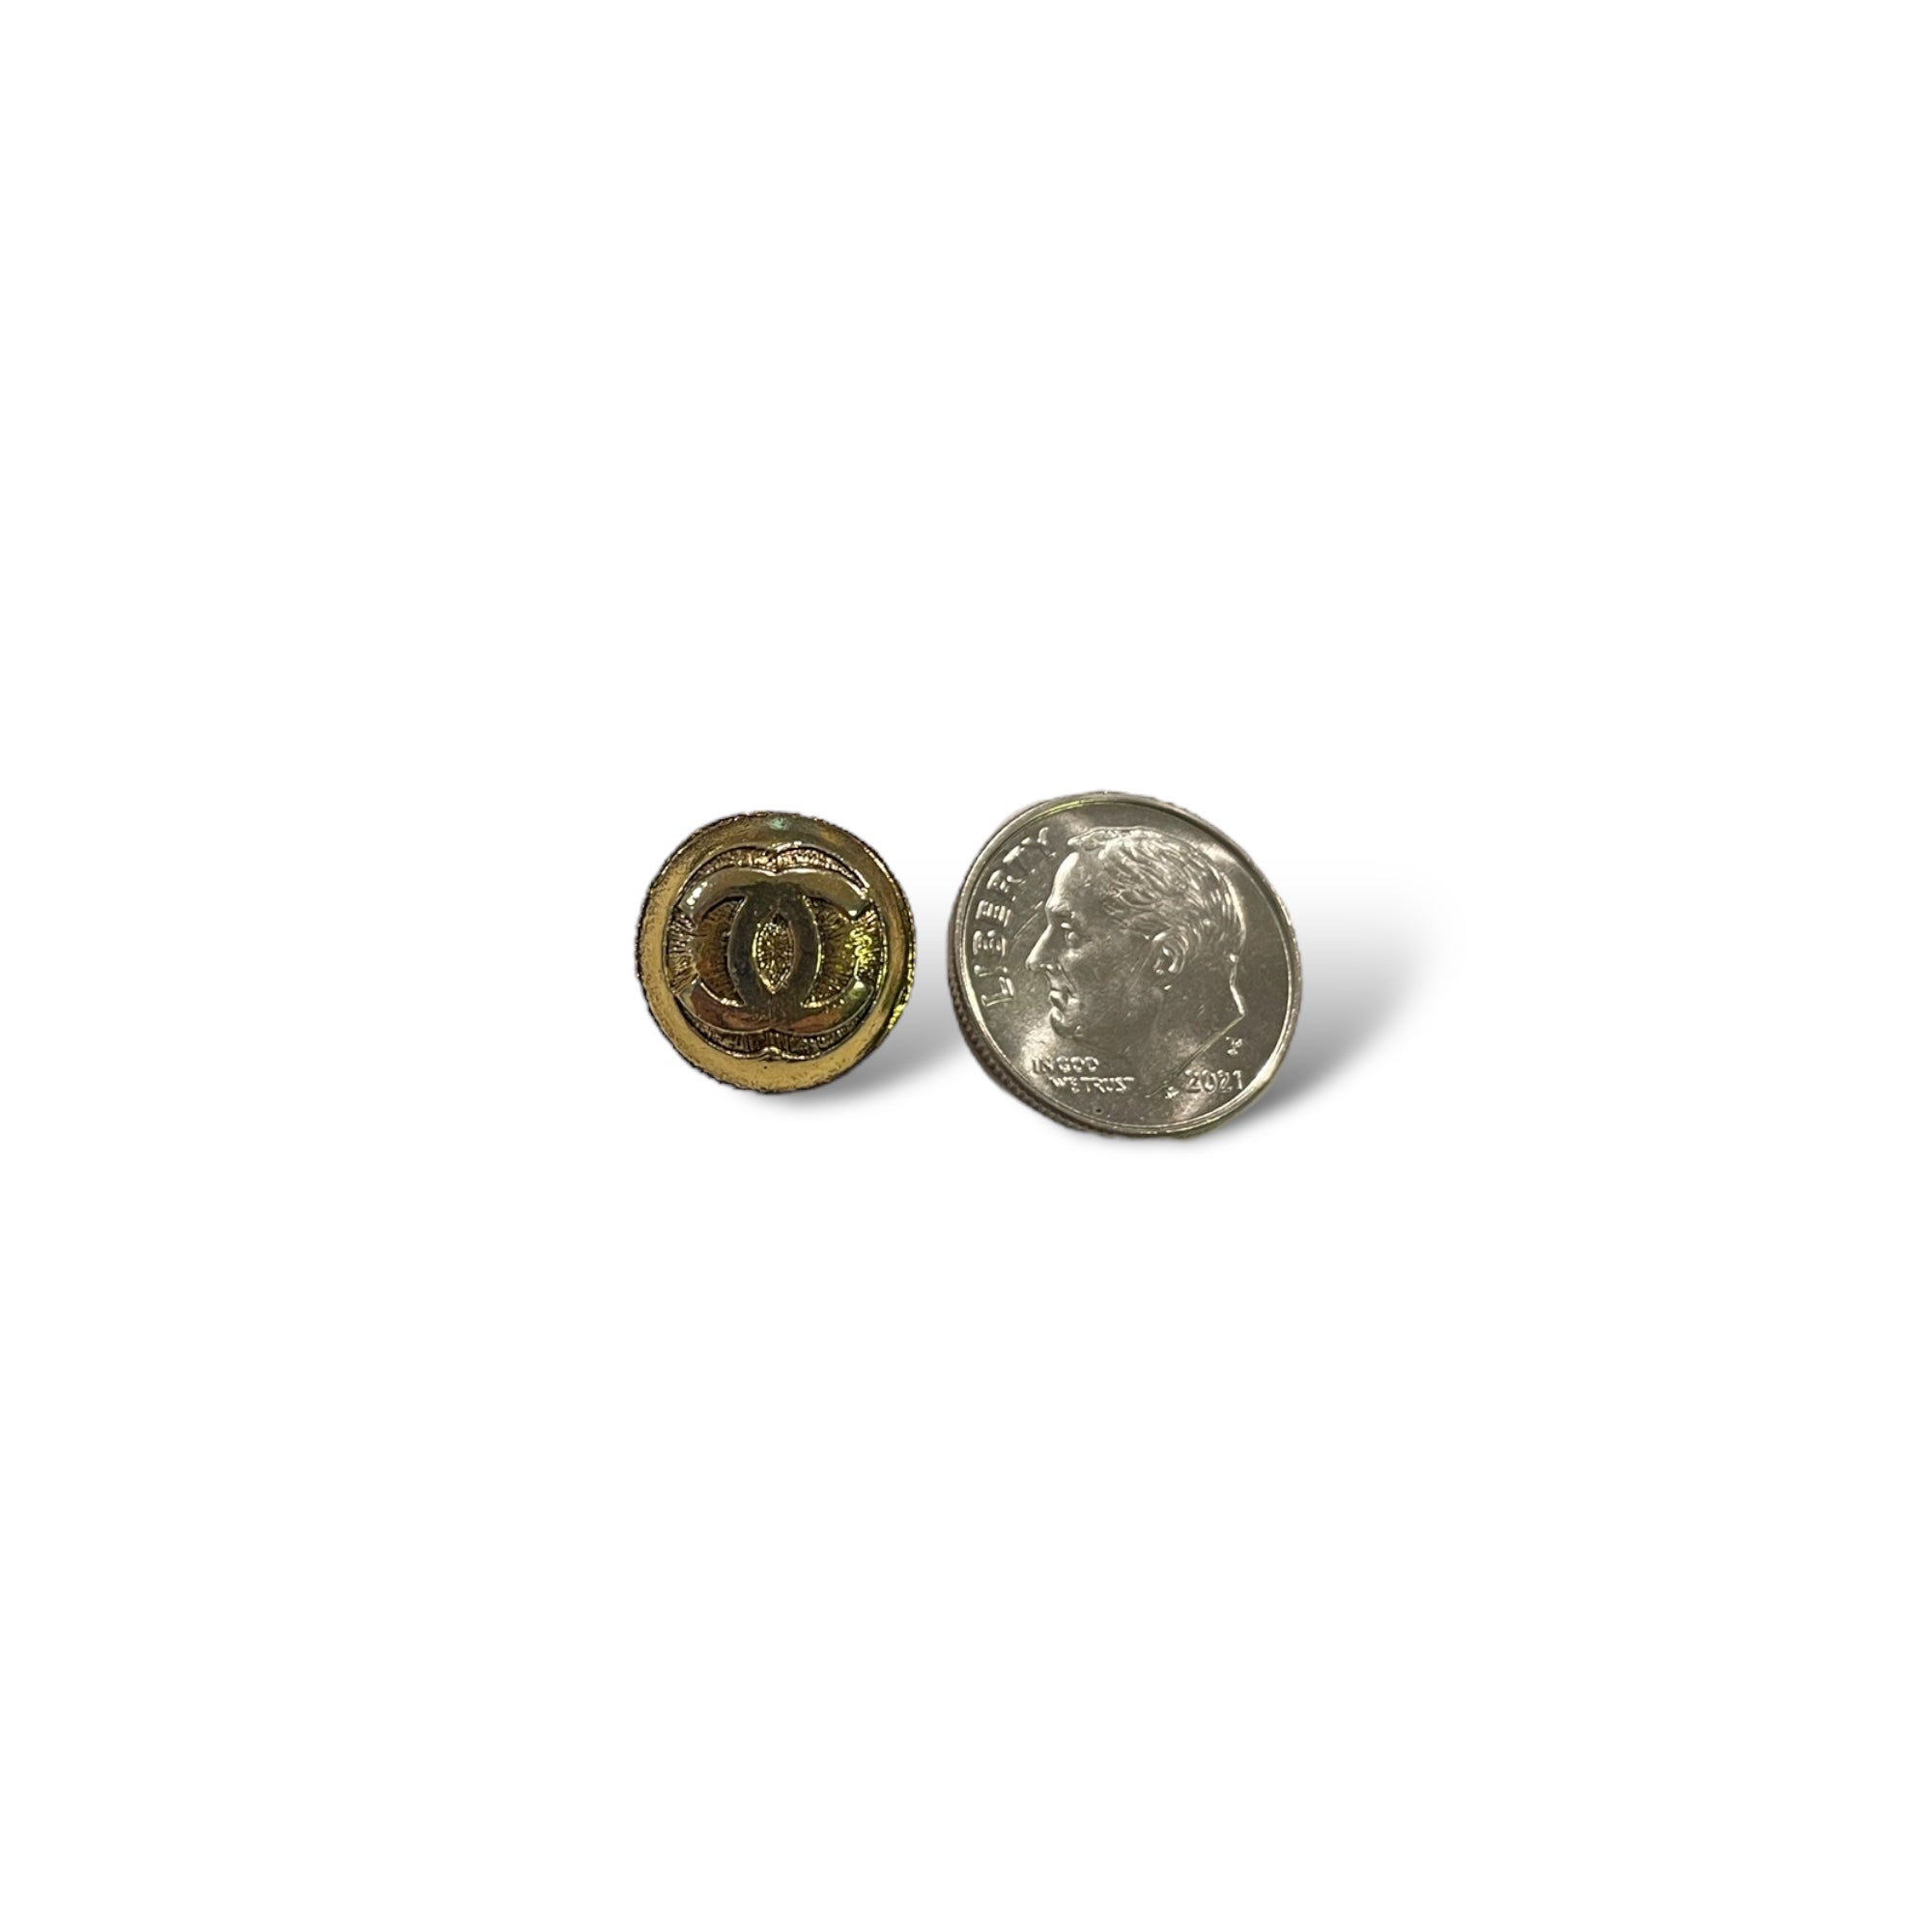 CHANEL Vintage Gold CC Logo Cufflinks/Buttons (1 Pair / 4 Detachable Buttons)